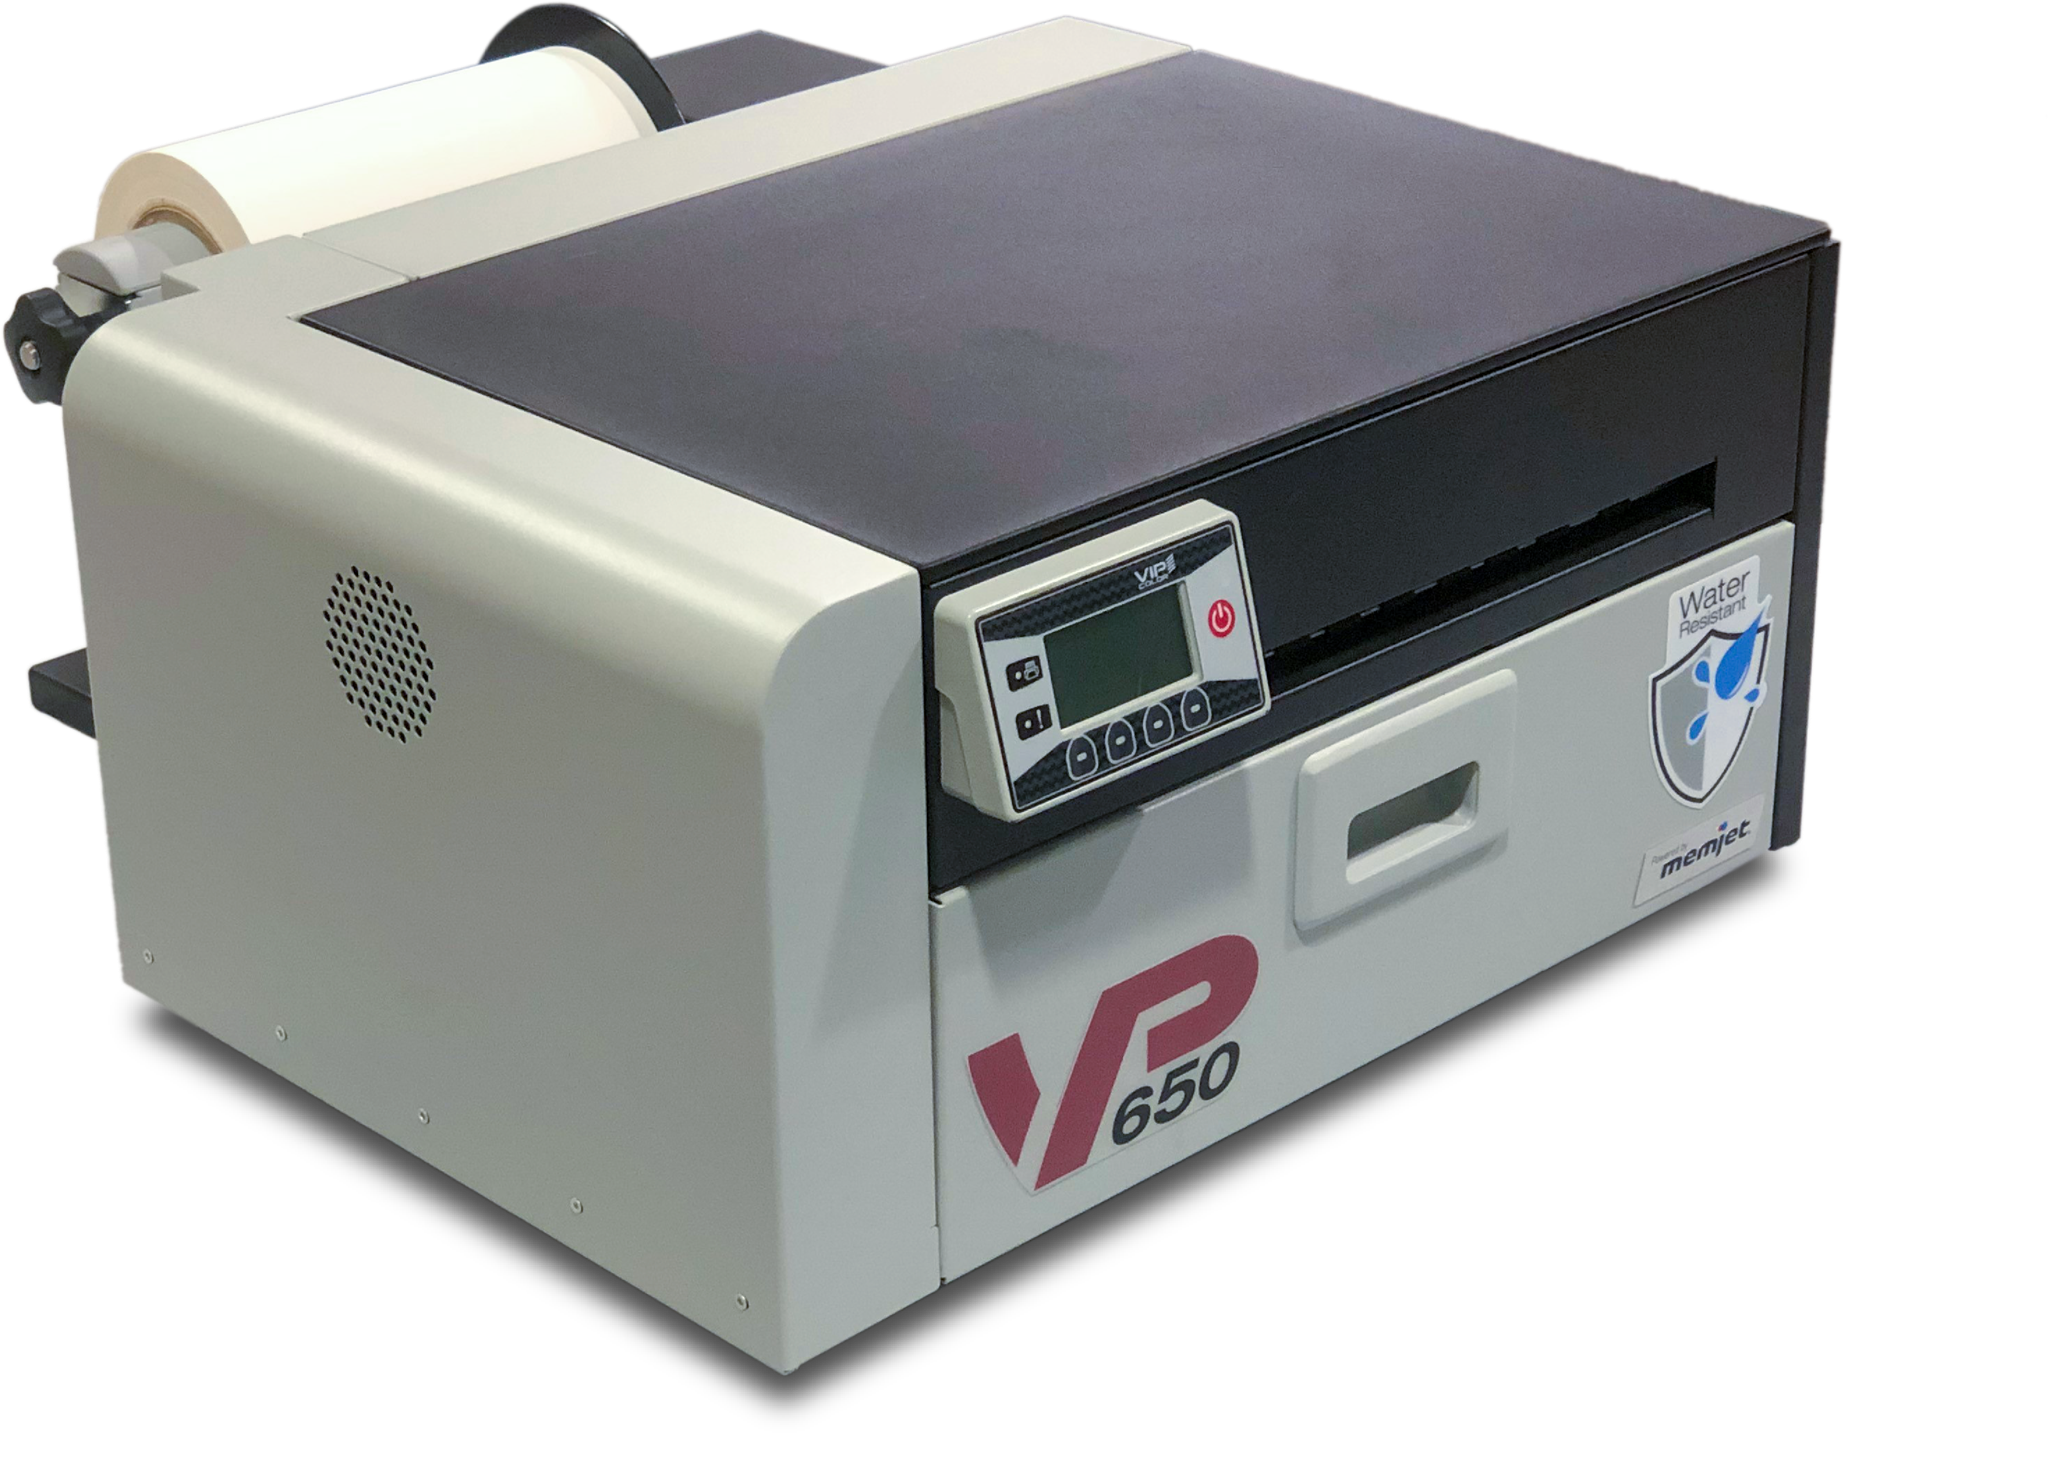 Afbeelding van VIP COLOR VP650 Label Printer incl. externe afroller, printkop en inktset